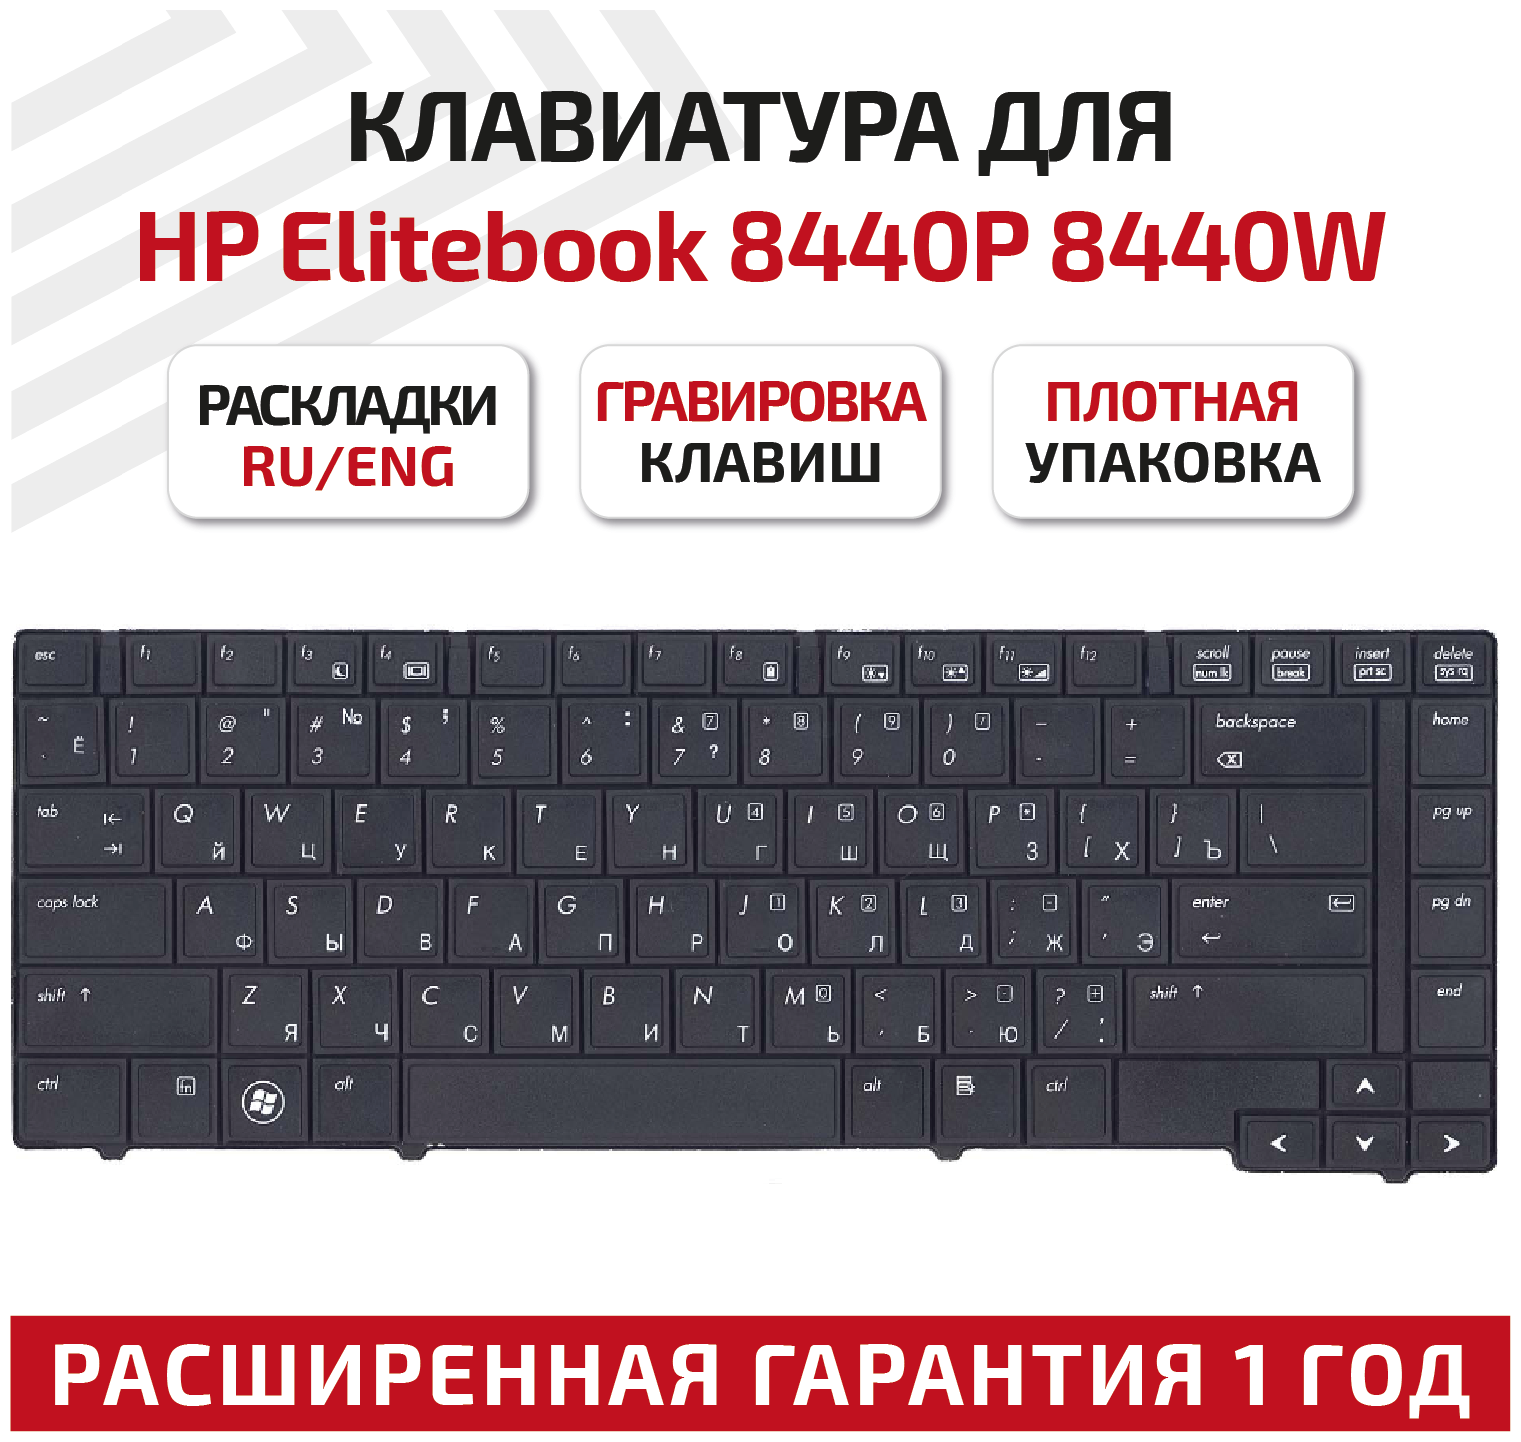 Клавиатура (keyboard) V103102CS1 для ноутбука HP EliteBook 8440P, 8440W, черная